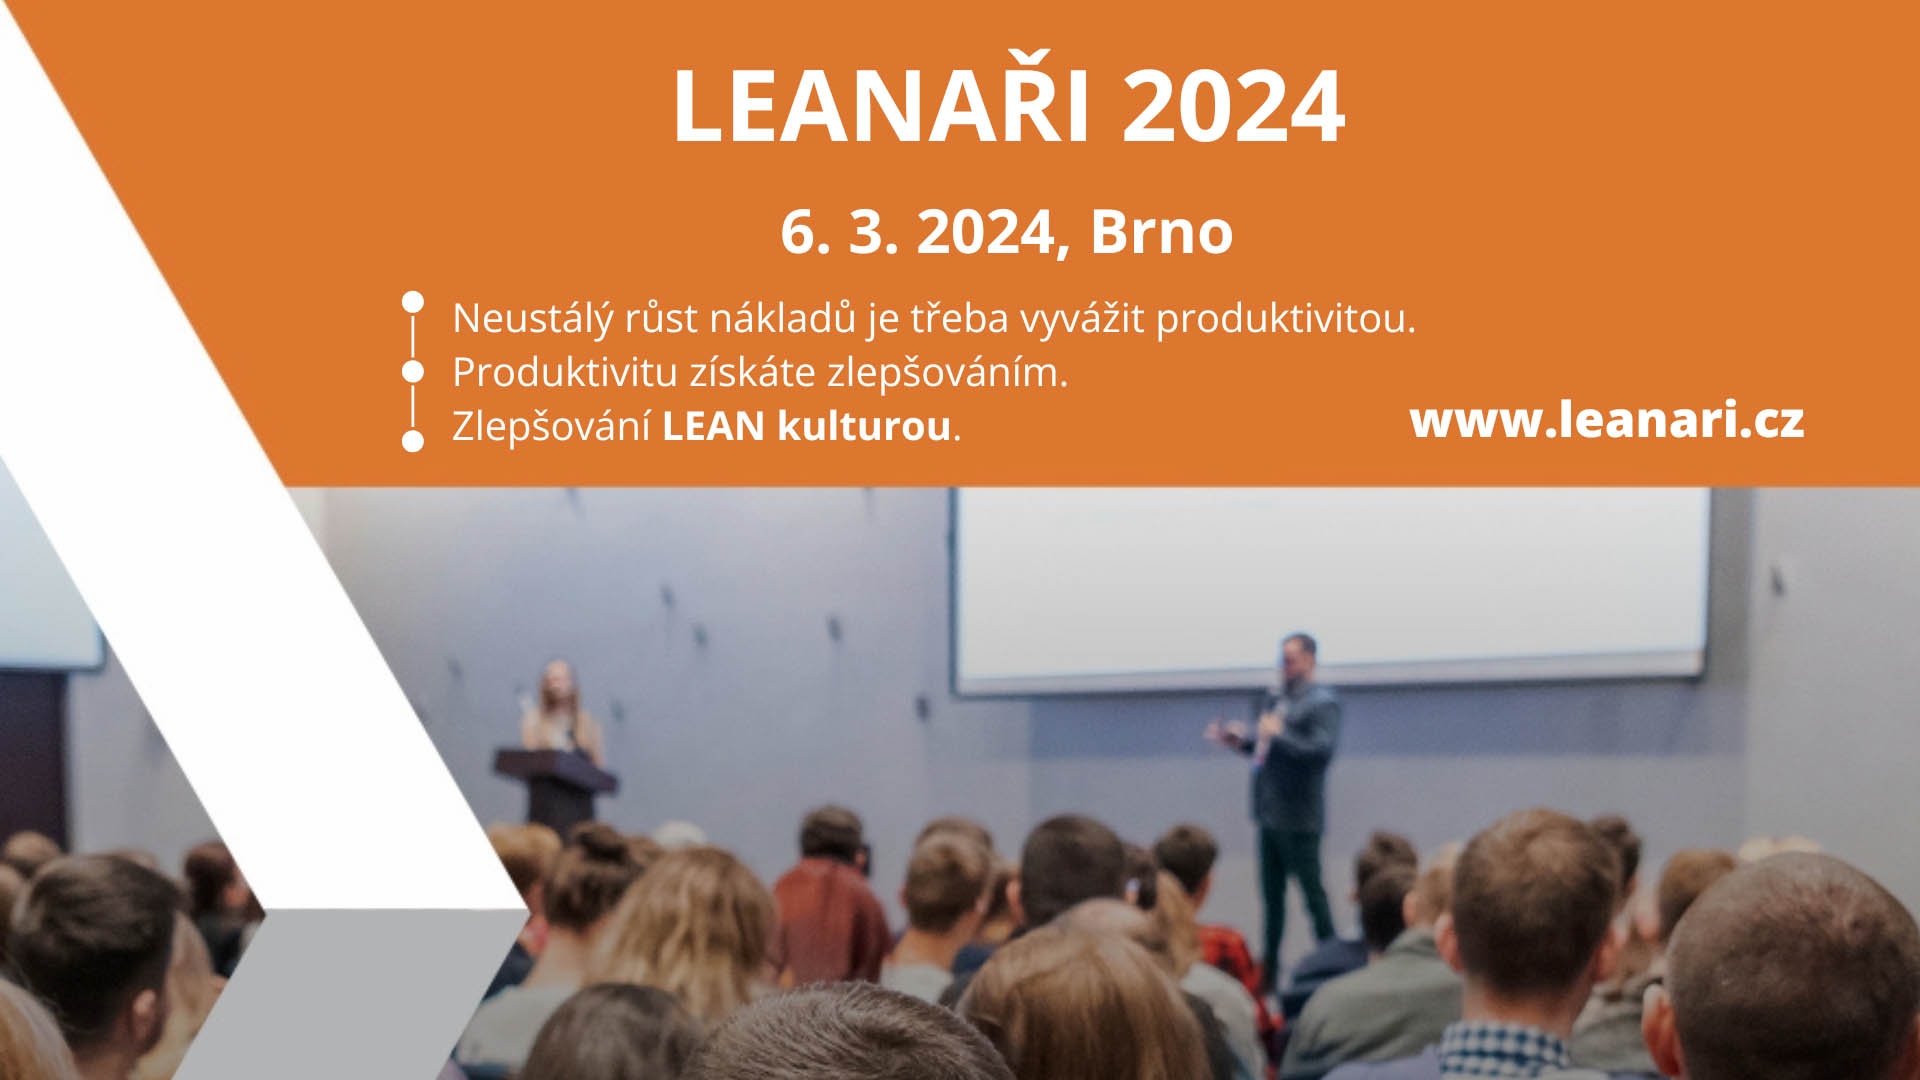 Leanaři 2024 – konference, kde nebudete jen poslouchat